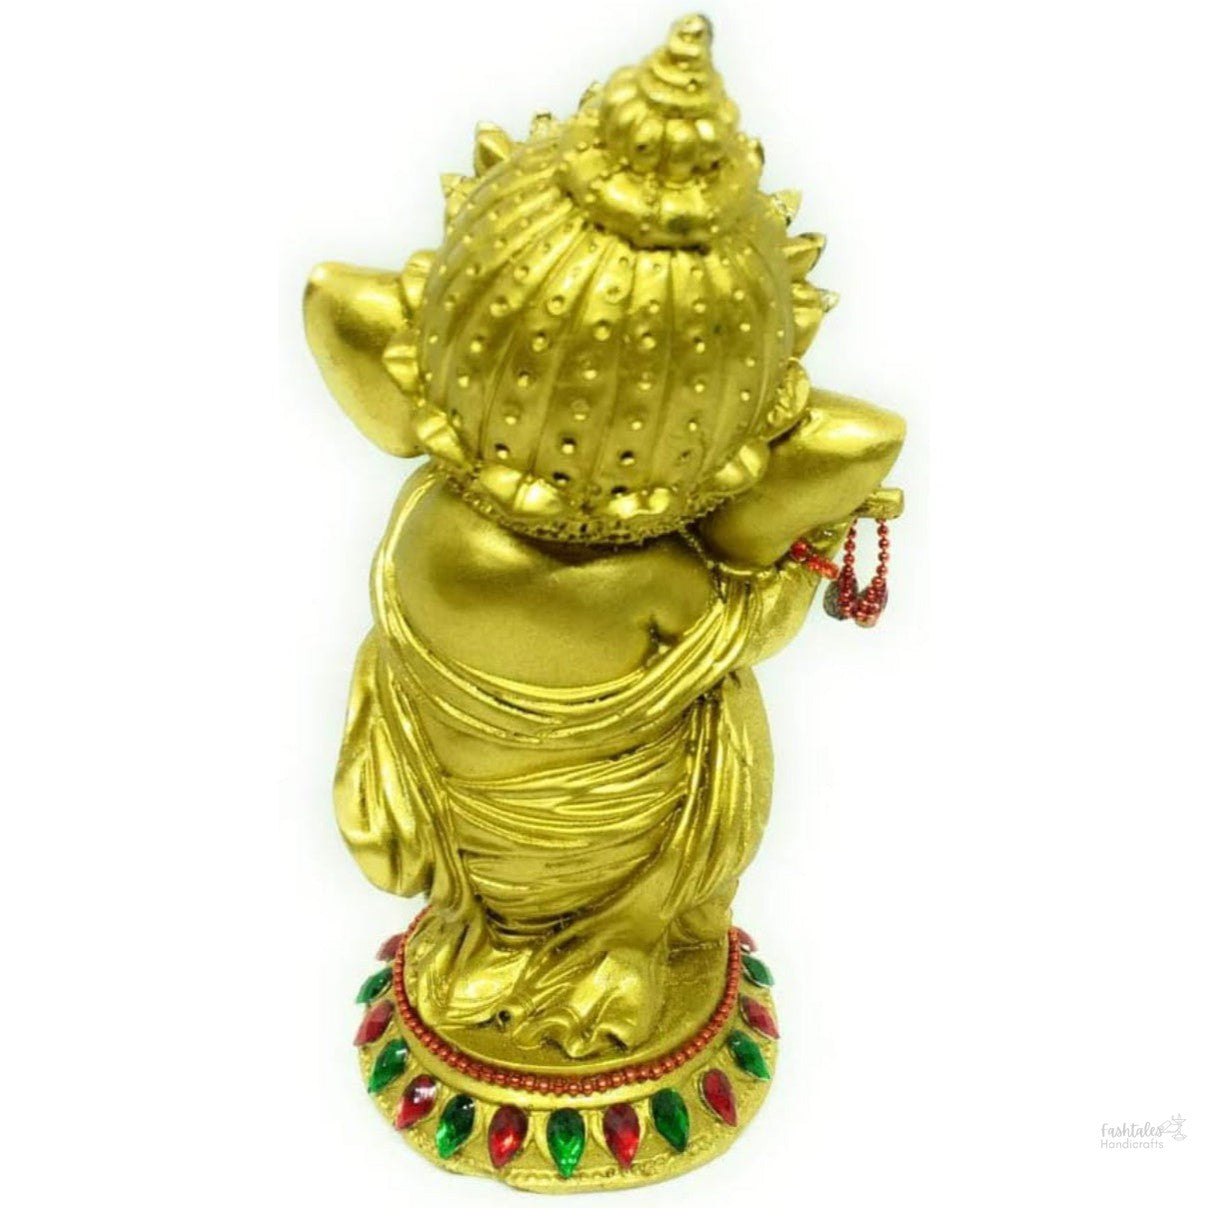 Fashtales Handicrafts Ganesha Idol for Home Decor | Ganesh Idol